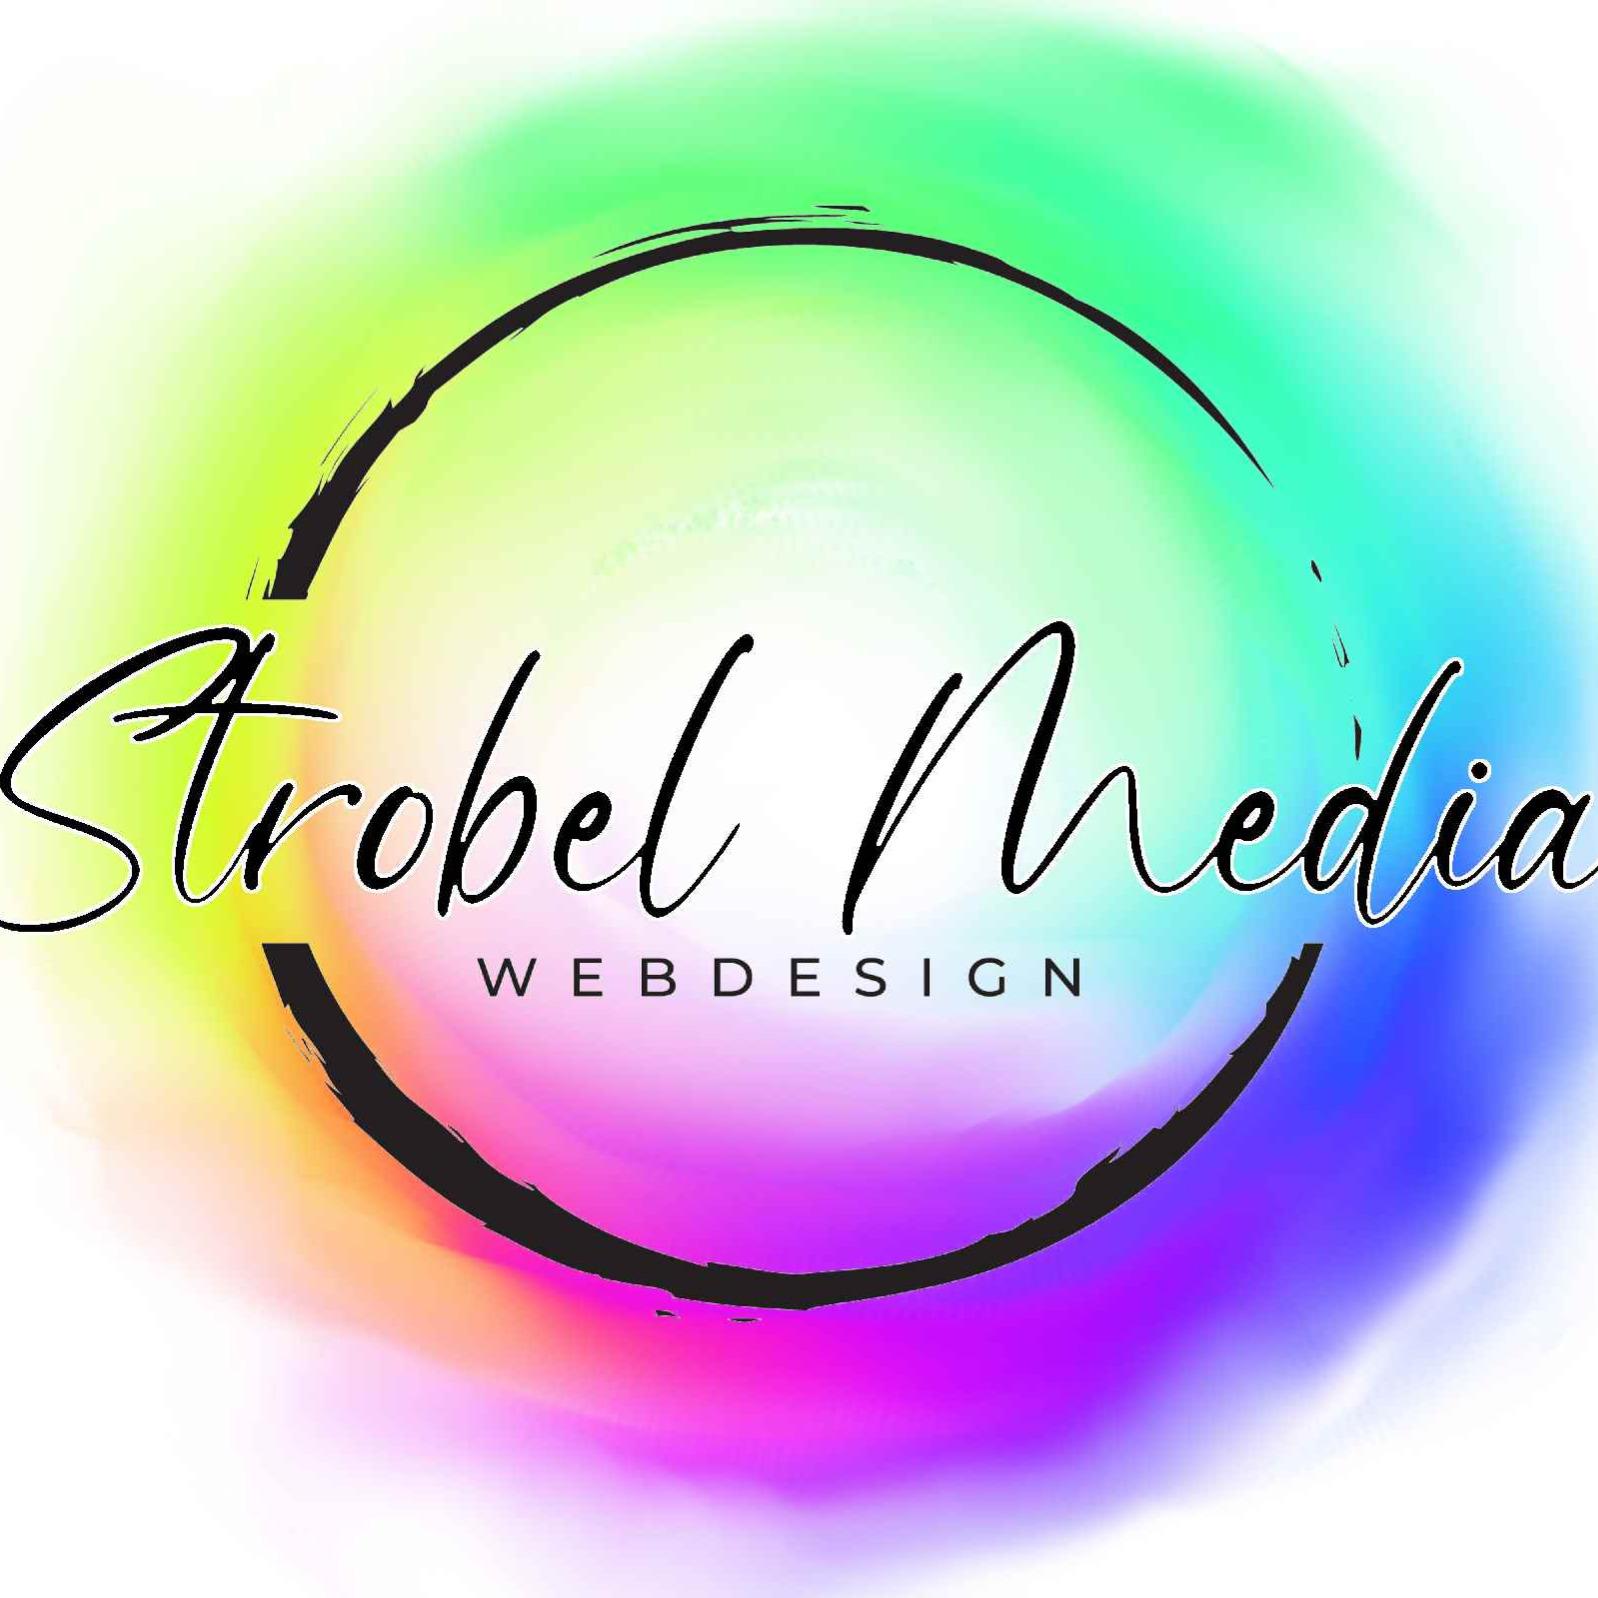 Webdesign Strobel Media